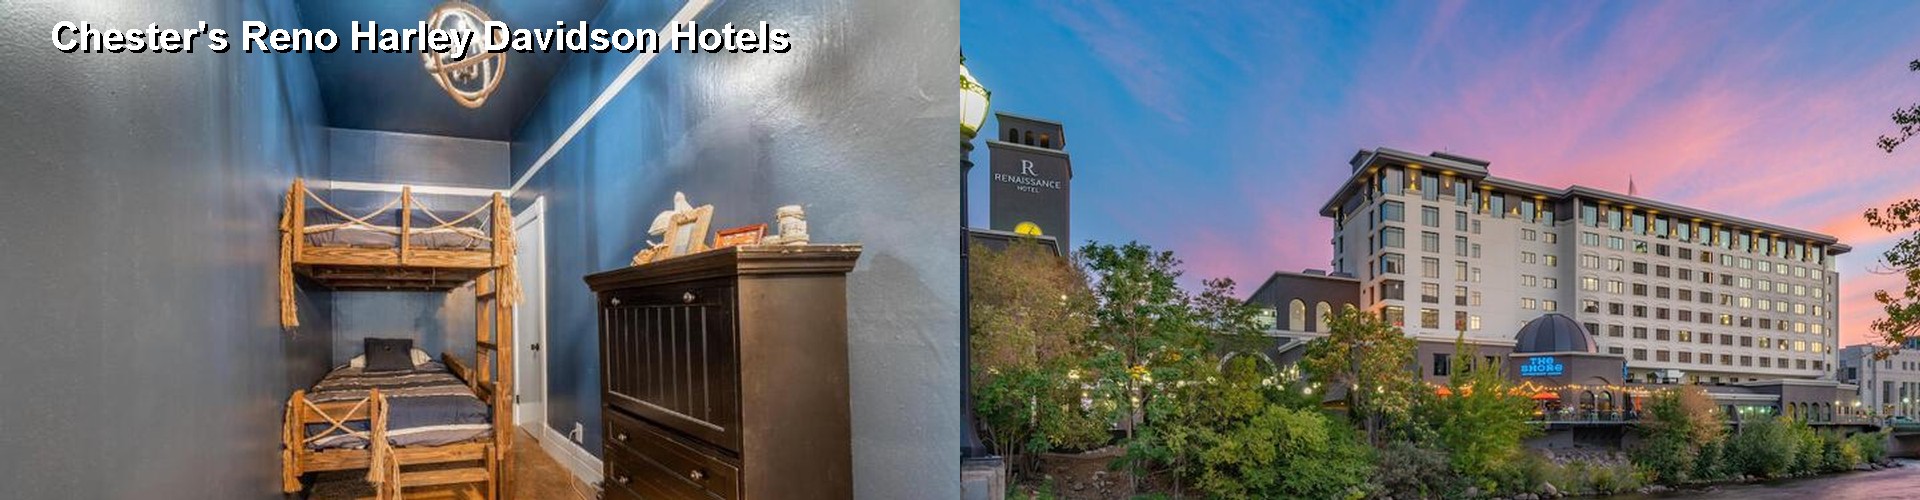 4 Best Hotels near Chester's Reno Harley Davidson